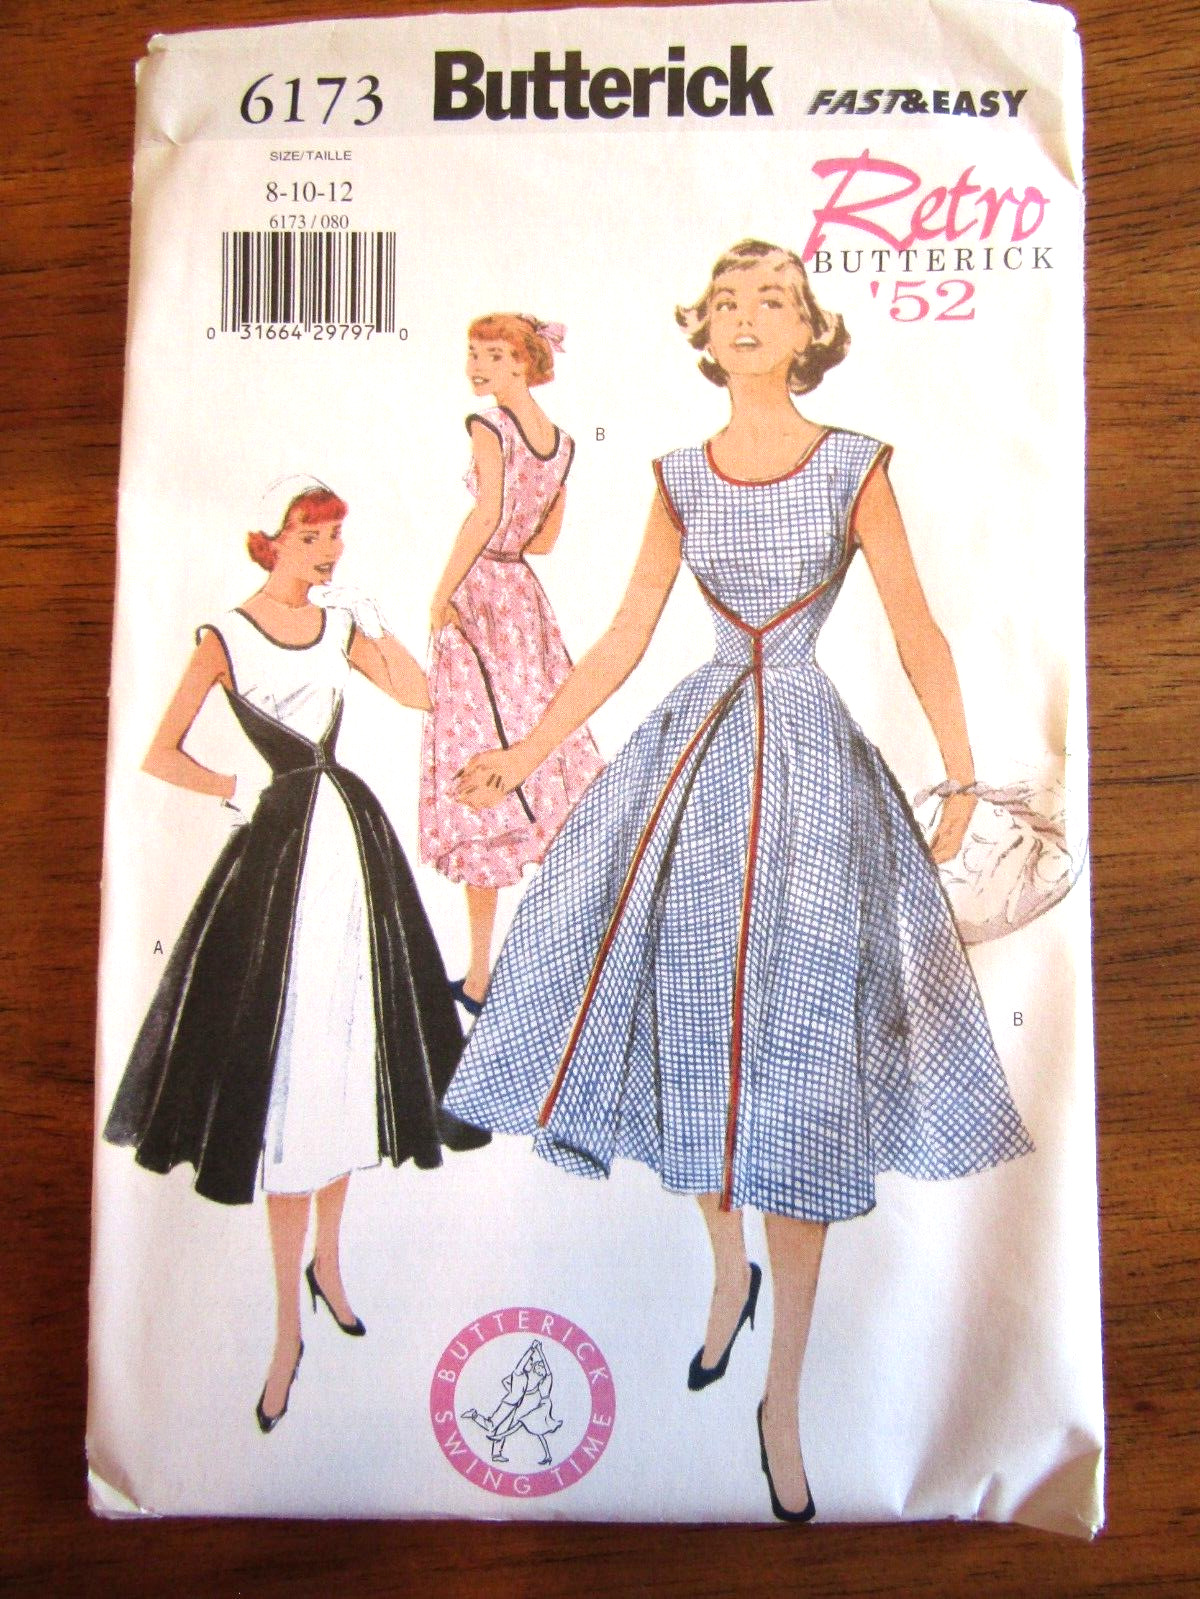 Butterick 6173 Retro Butterick 1952 Dresses Size 8-10-12 FF